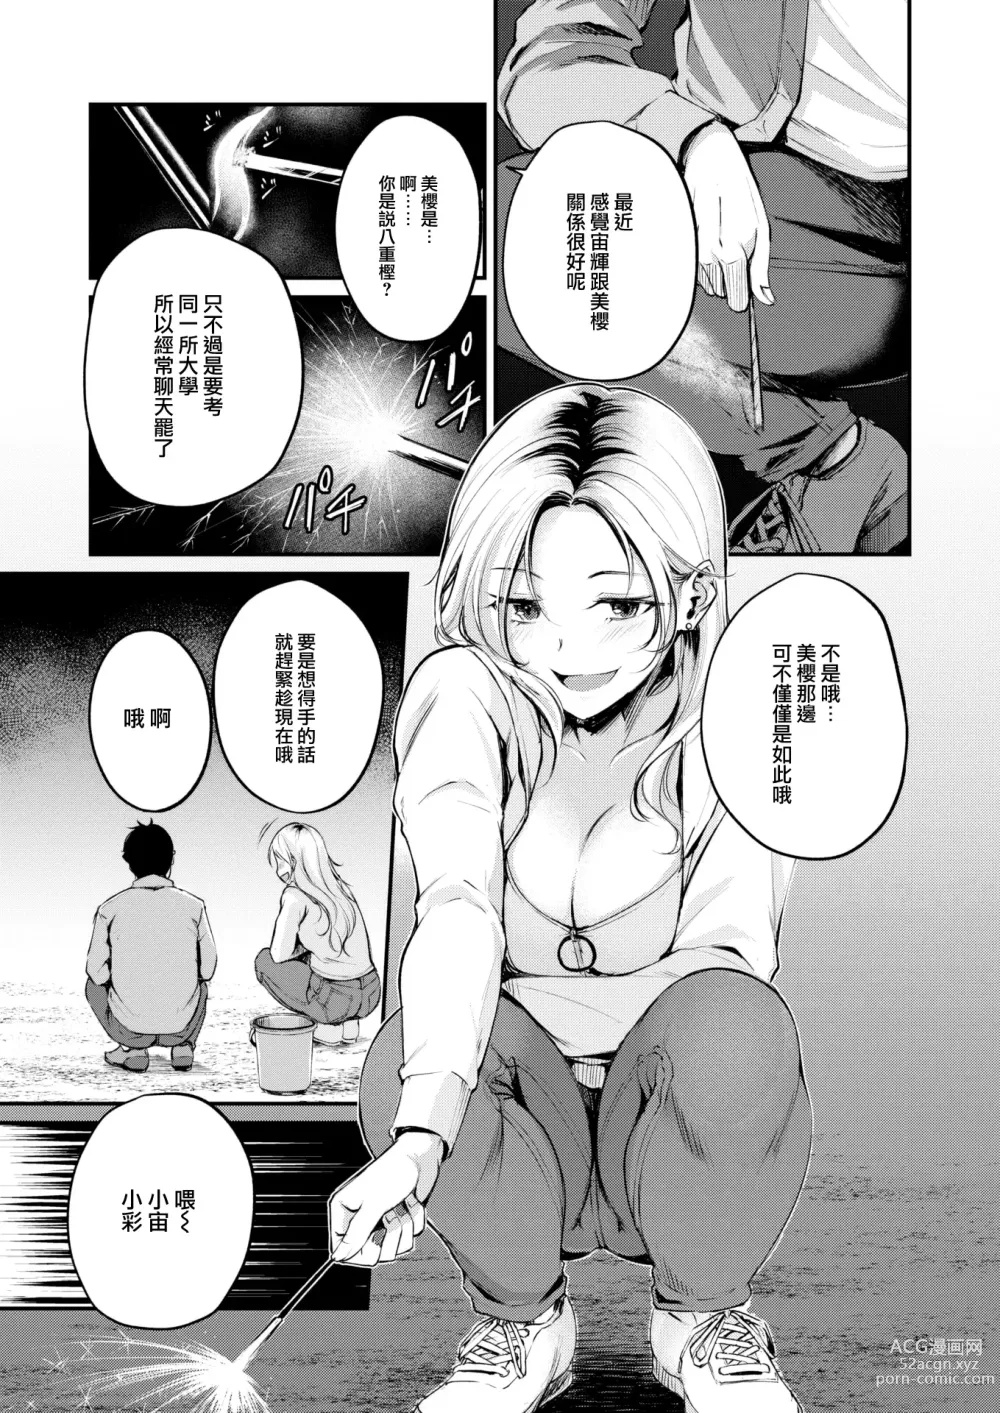 Page 4 of manga Senkou Hanabi no Koi